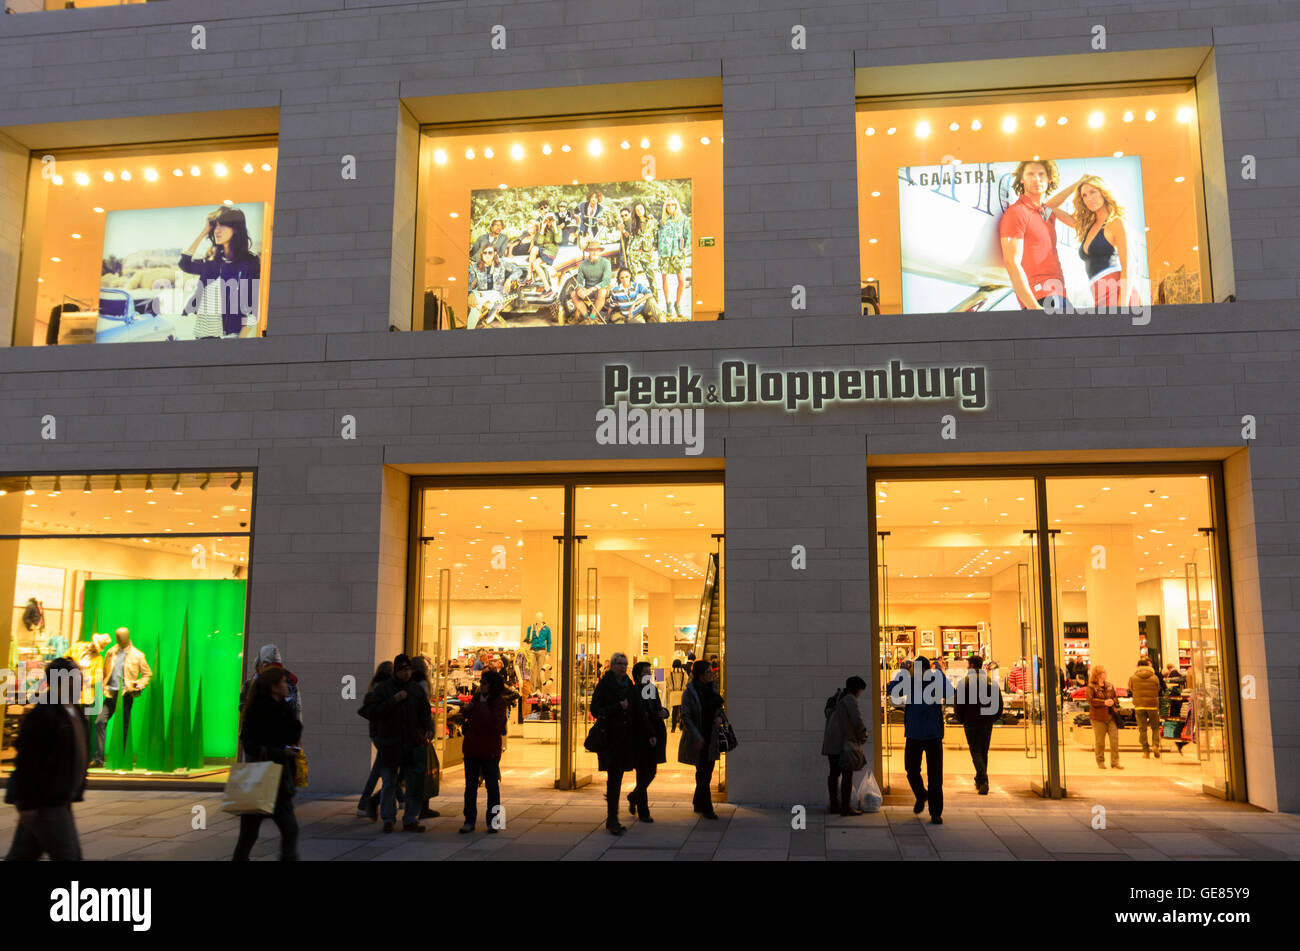 Peek cloppenburg vienna hi-res stock photography and images - Alamy